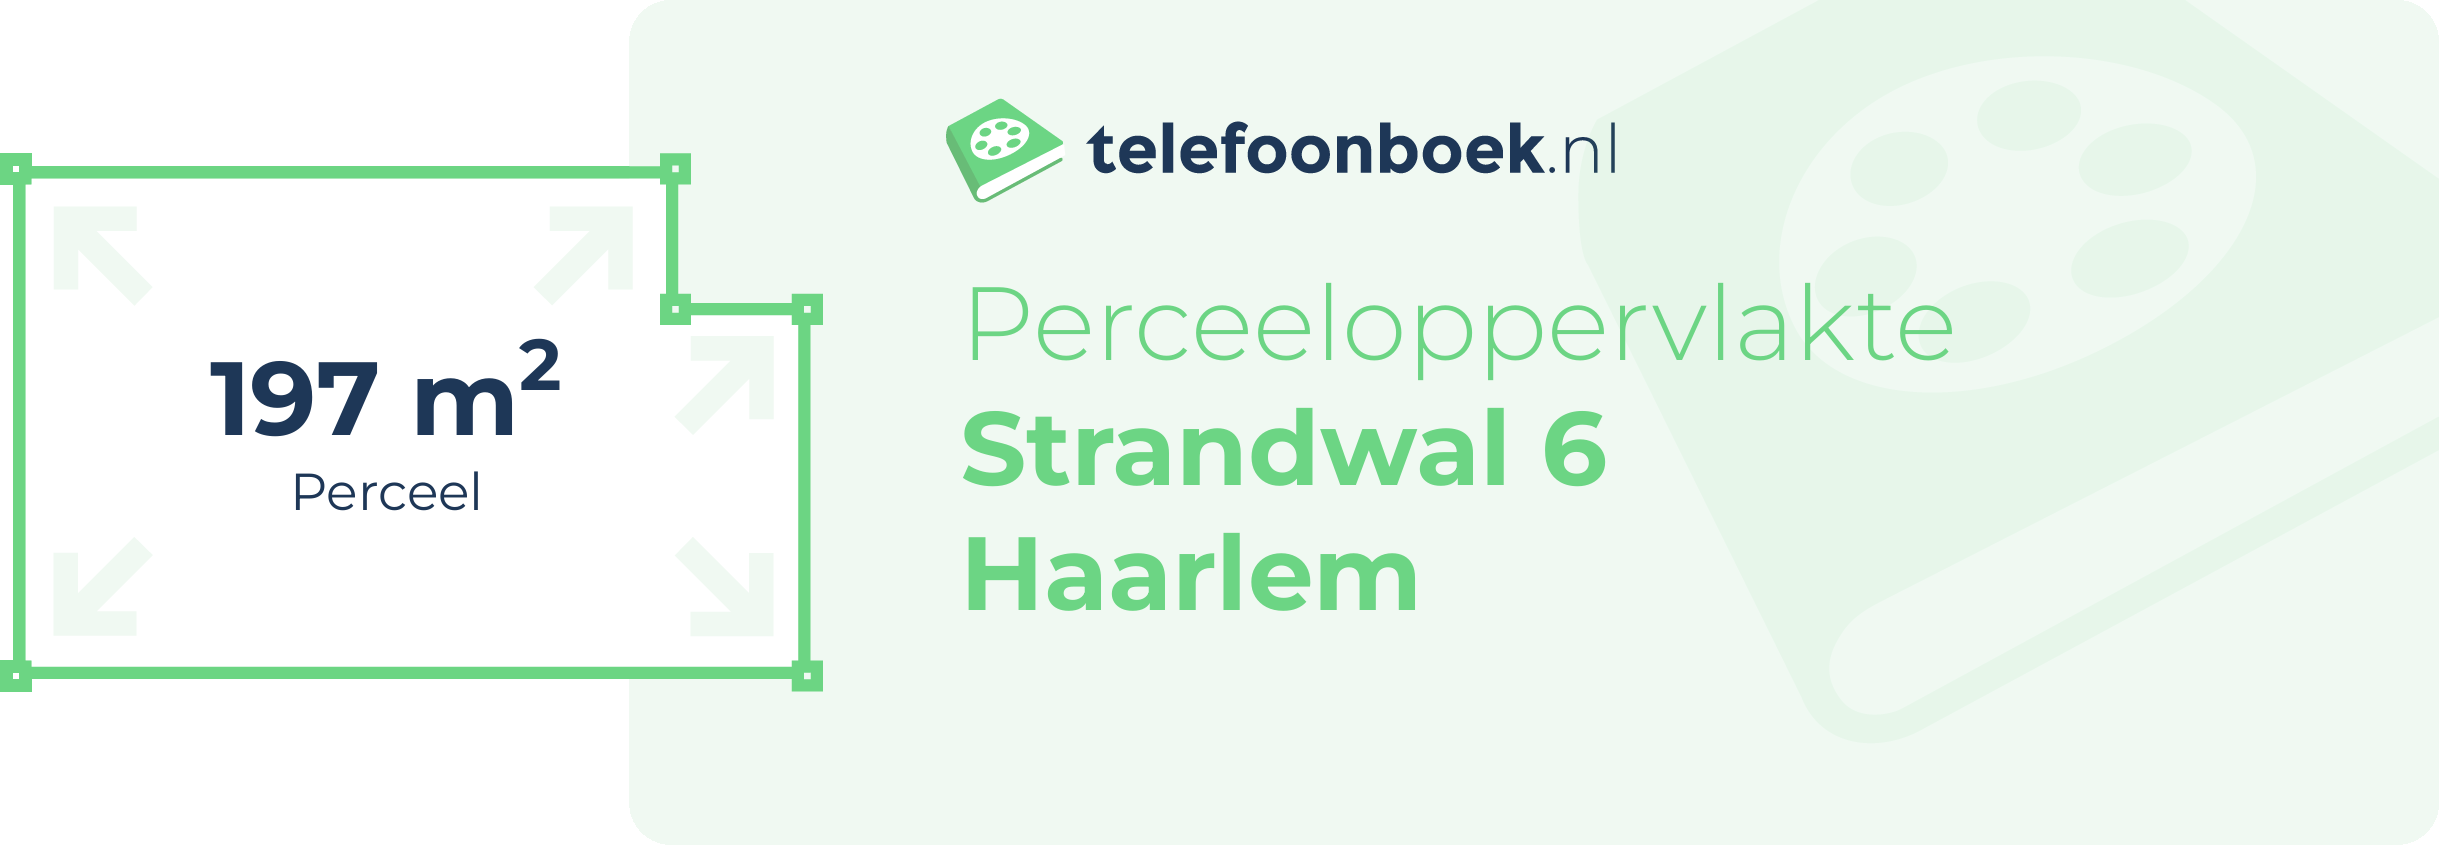 Perceeloppervlakte Strandwal 6 Haarlem